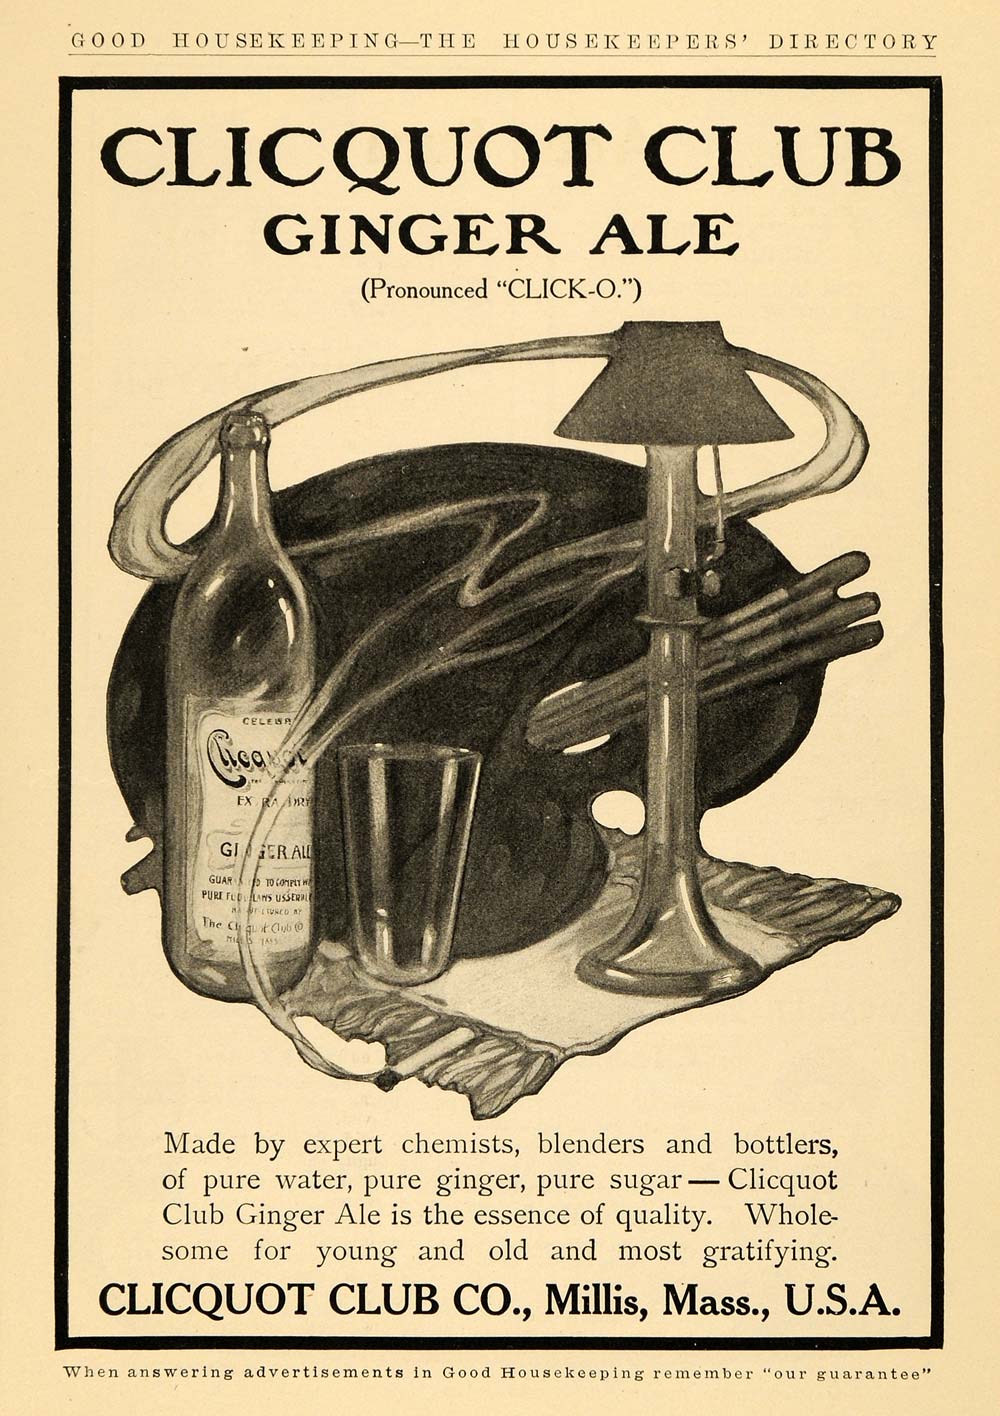 1908 Ad Clicquot Club Co. Ginger Ale Mineral Pure Water - ORIGINAL GH2